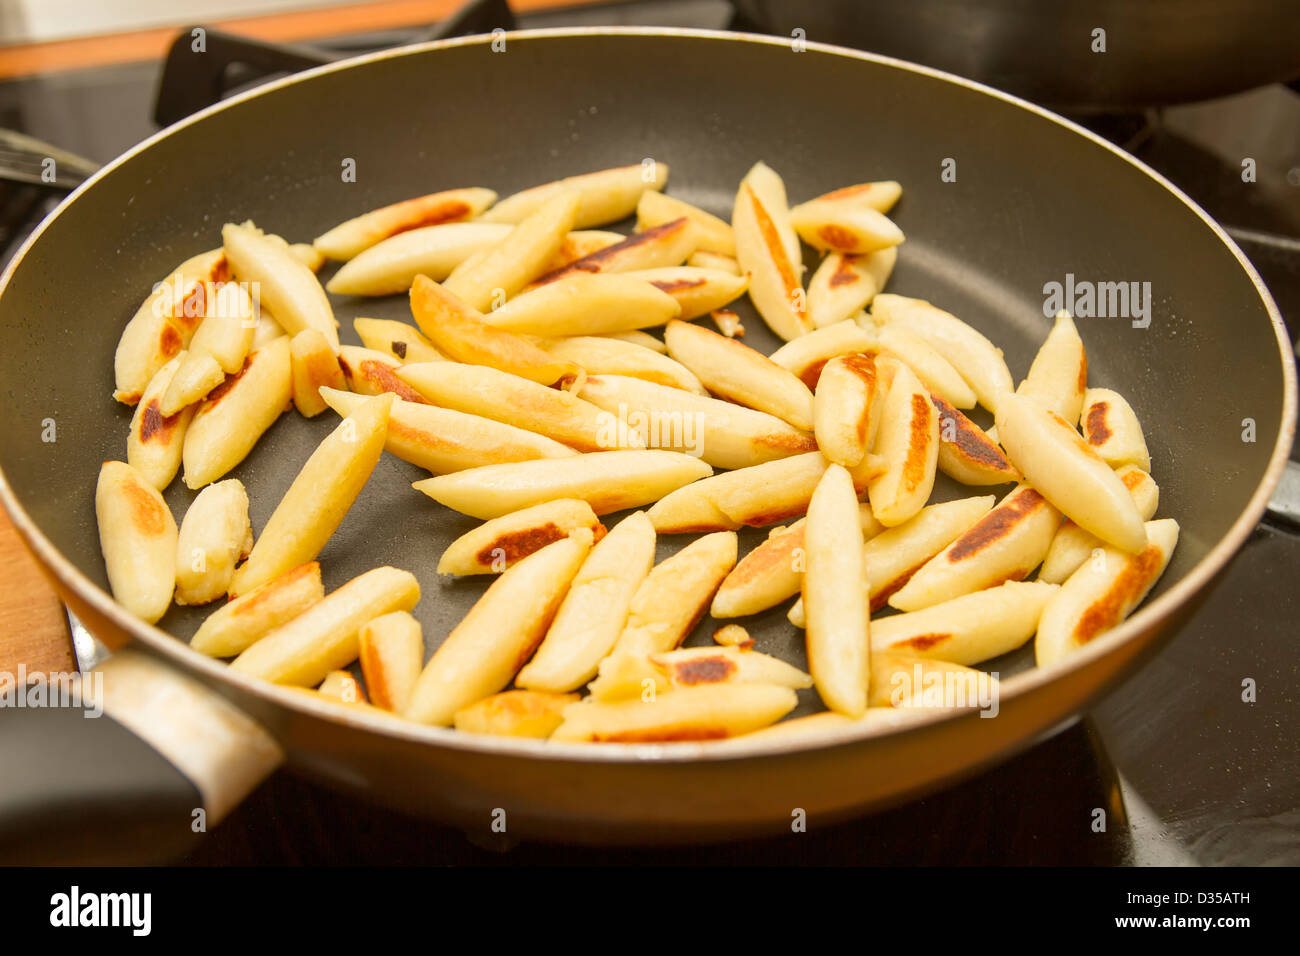 Potato noodles in a pan Stock Photo